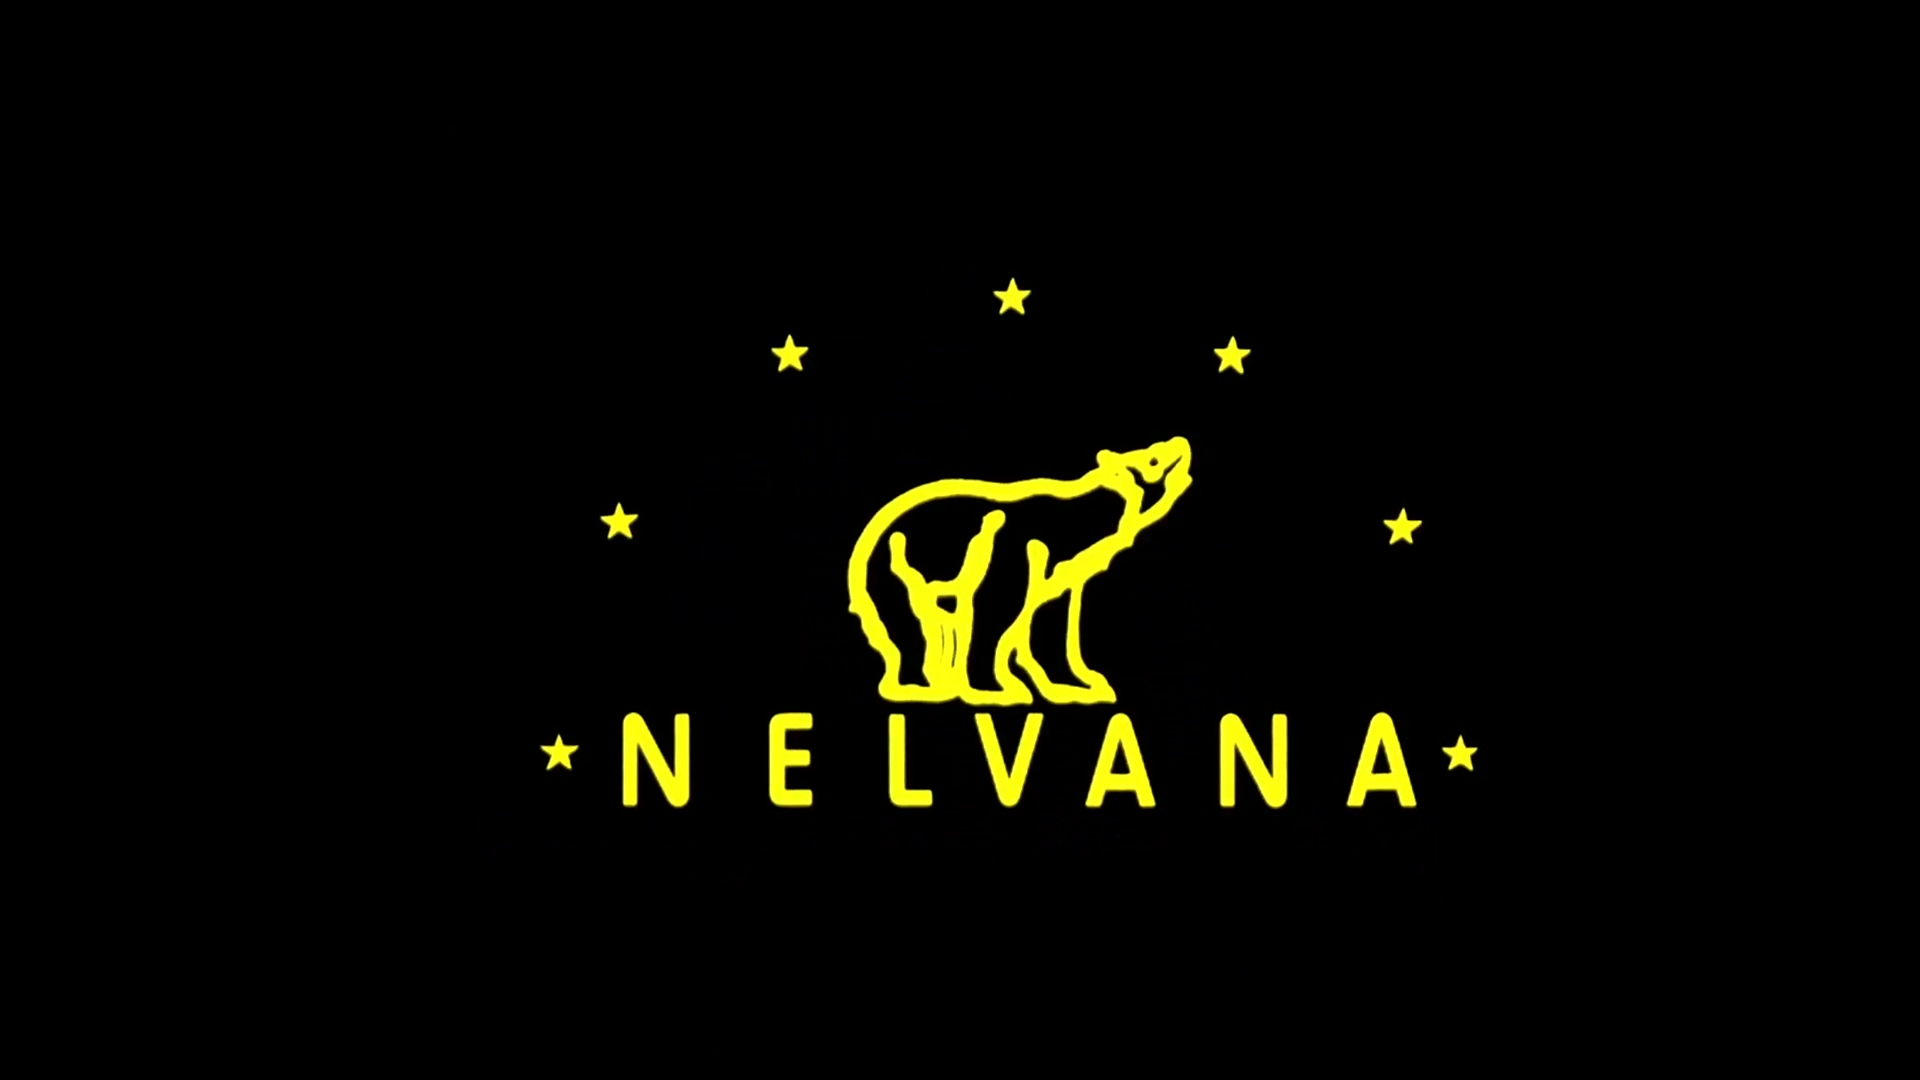 Nelvana (1986) (16:9) (HD)